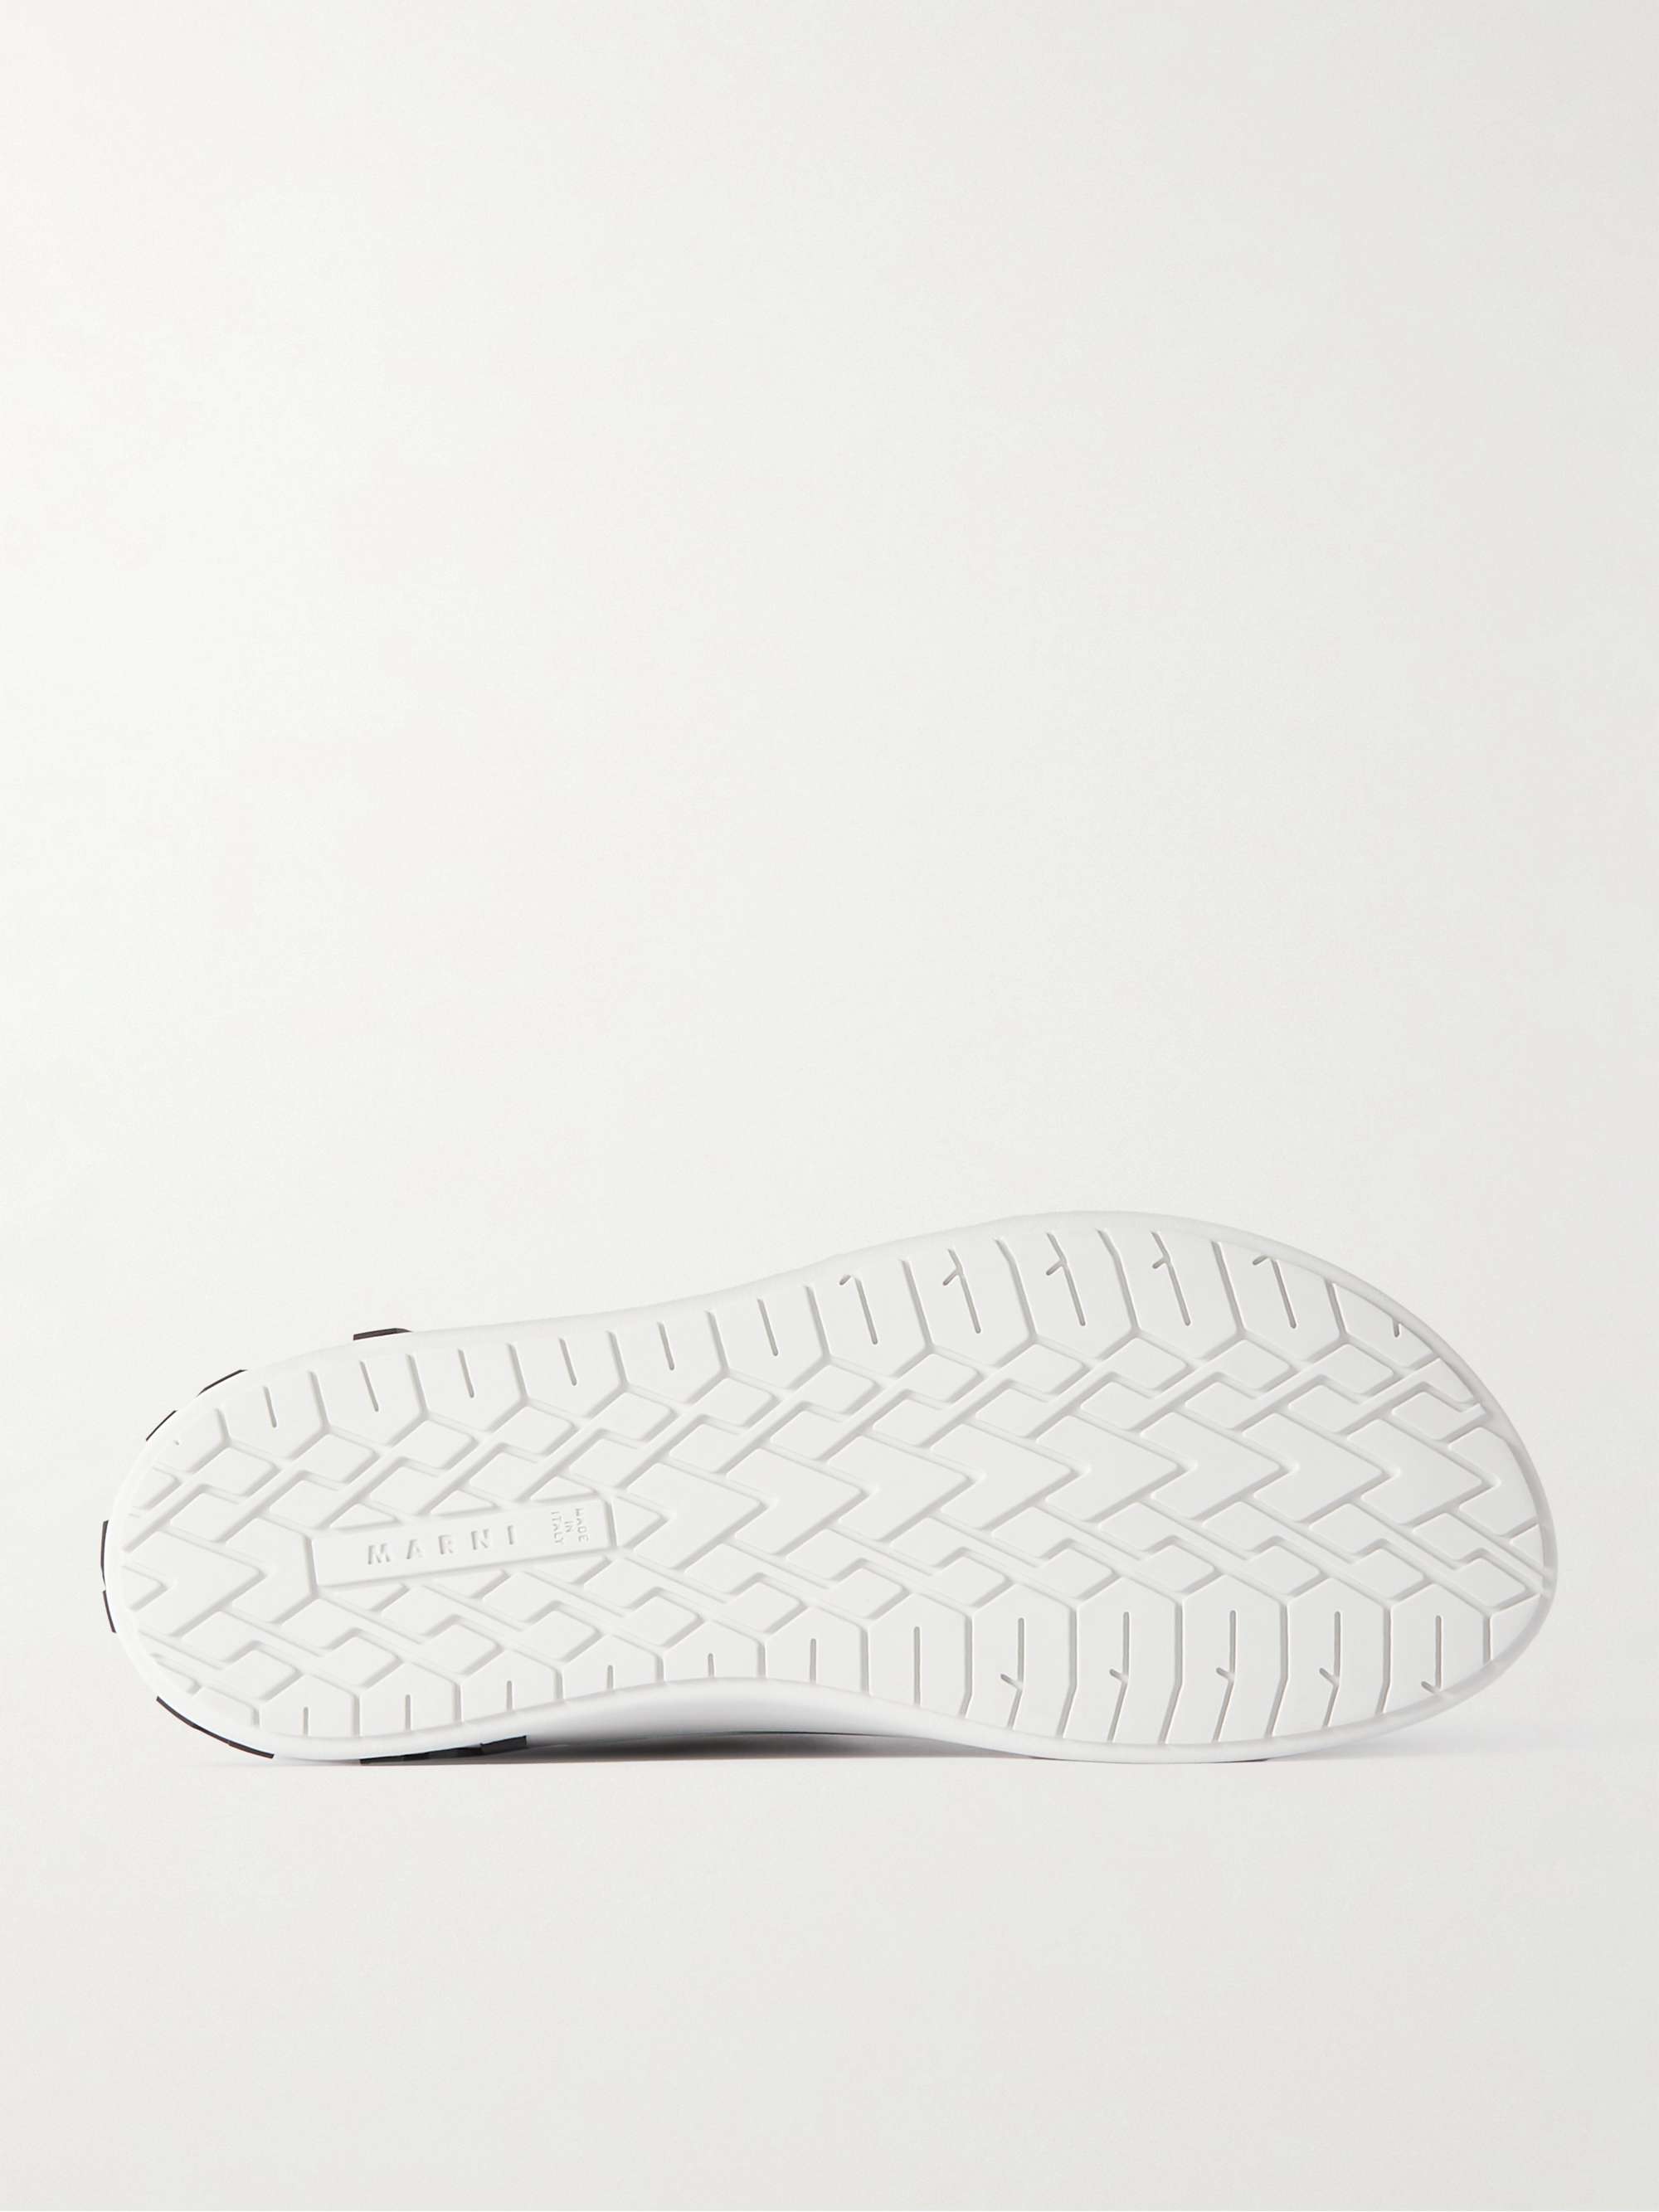 MARNI + Carhartt WIP Floral-Print Canvas Slip-On Sneakers